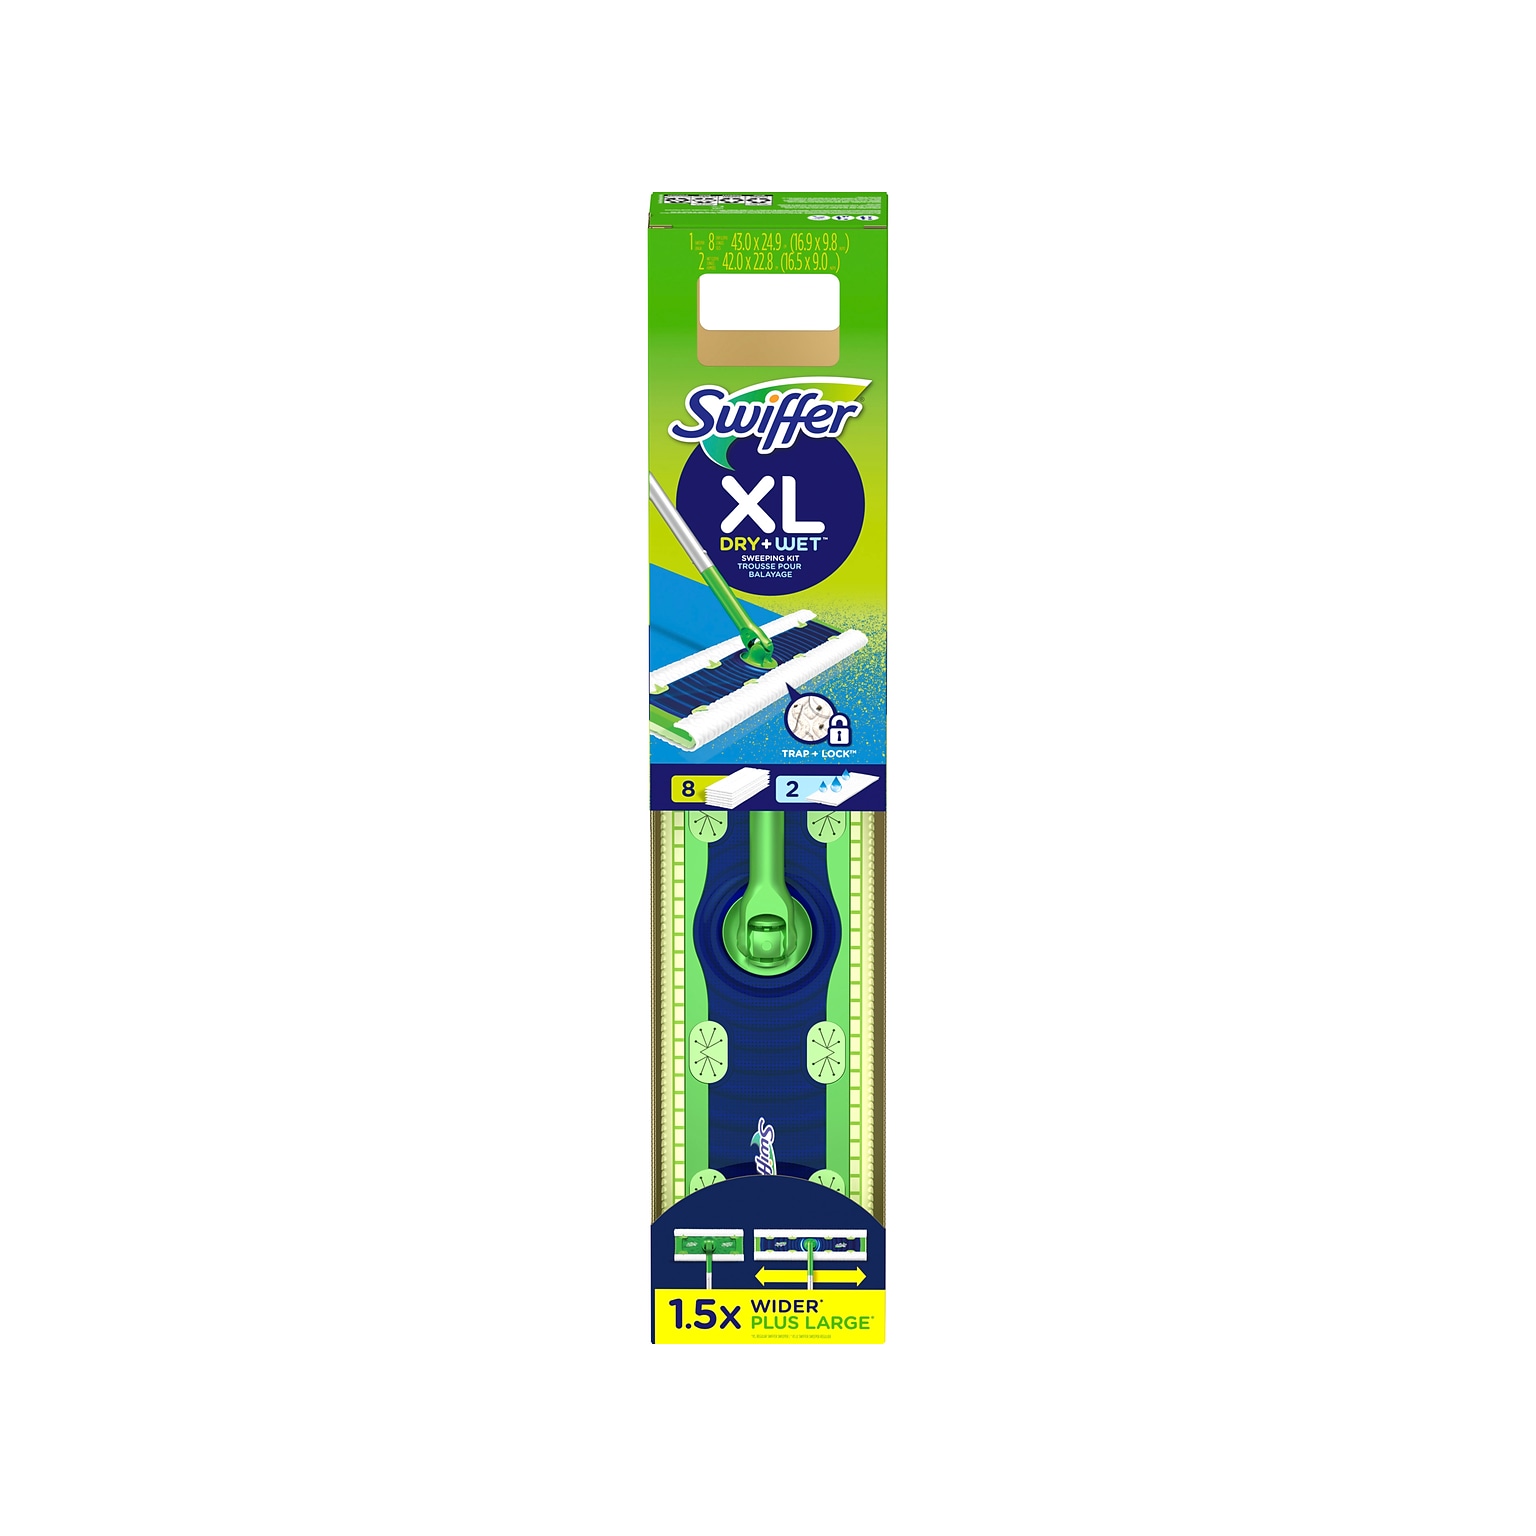 Swiffer Sweeper XL Dry + Wet Dust Mop Frame Kit, Multicolor (01096)